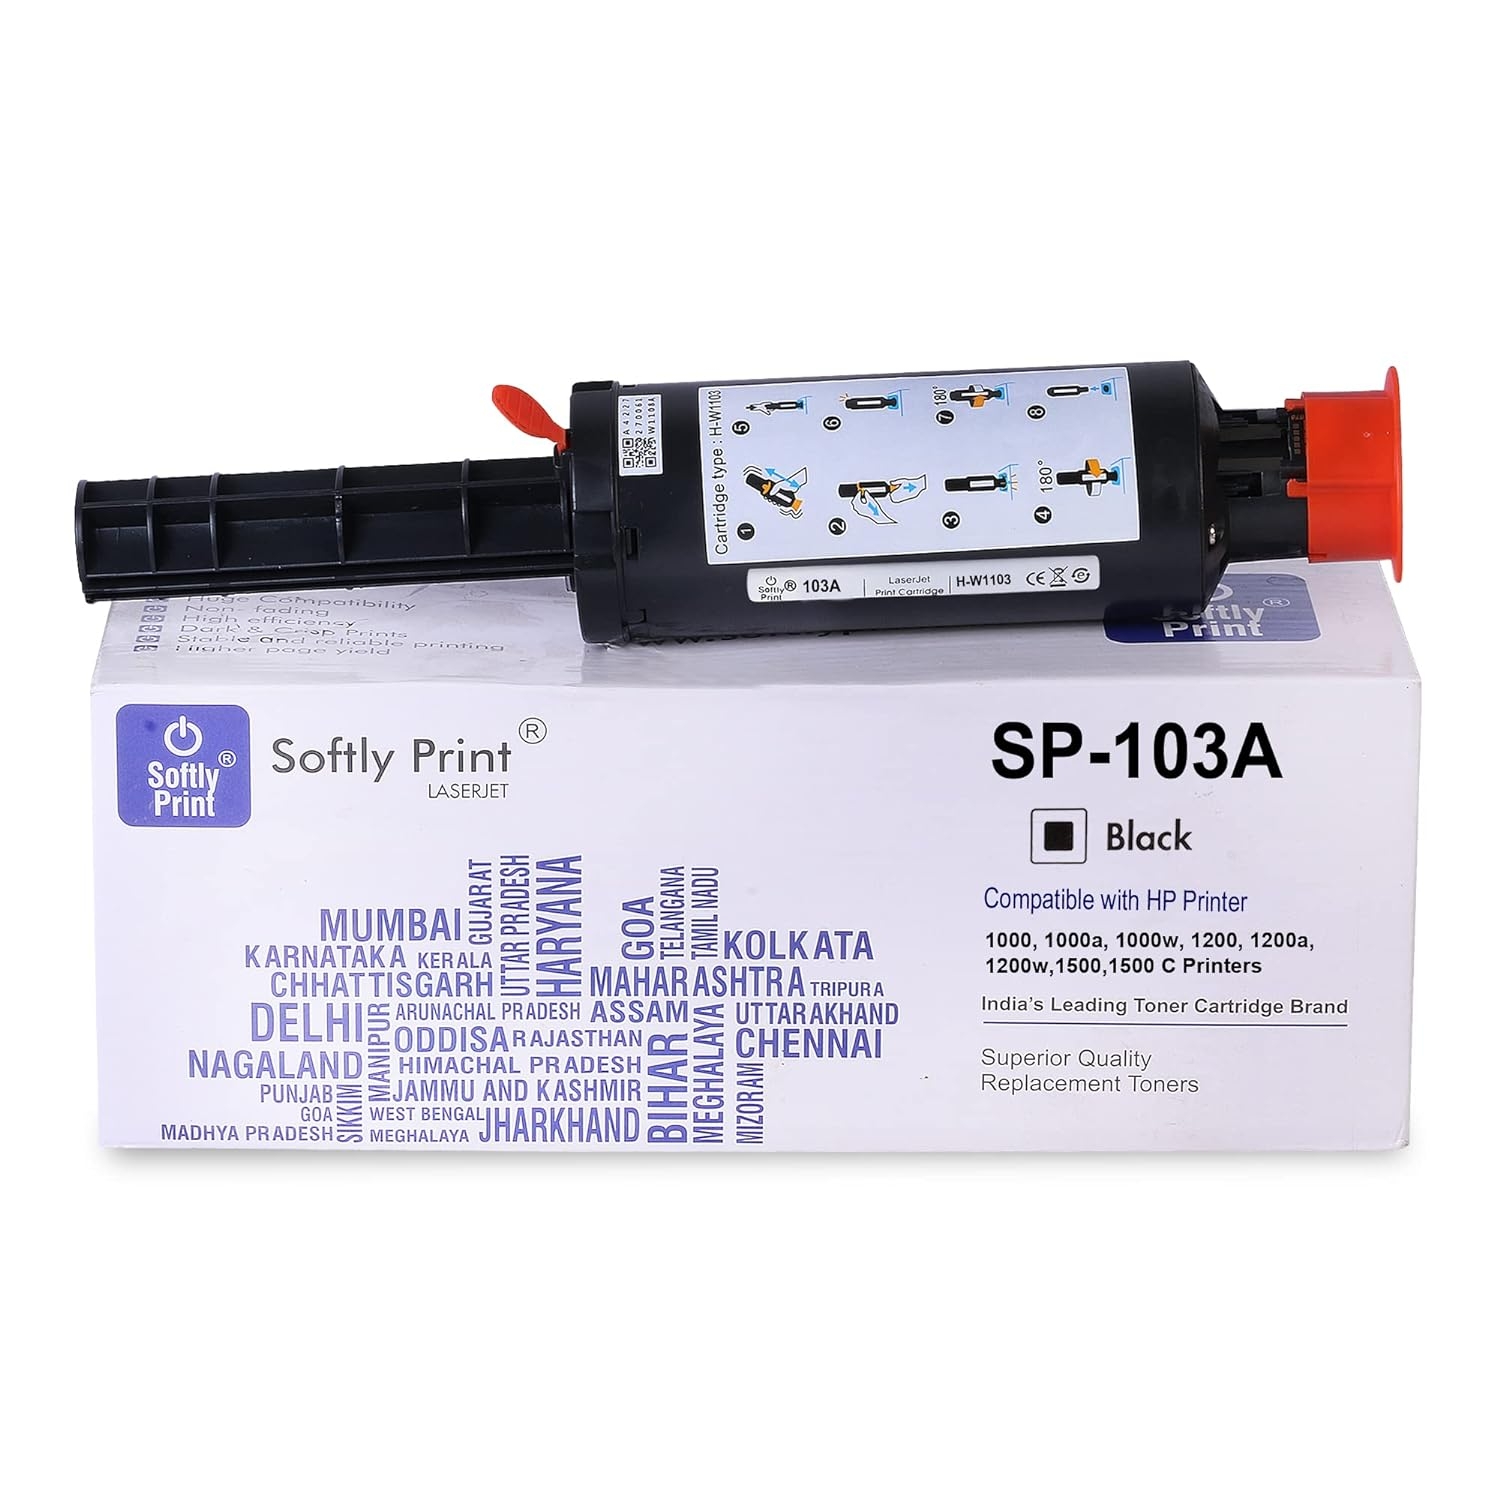 Softly Print 103A / W1103A Black Toner Cartridge for HP 1000, 1000a, 1000w, 1200, 1200a, 1200w Printers